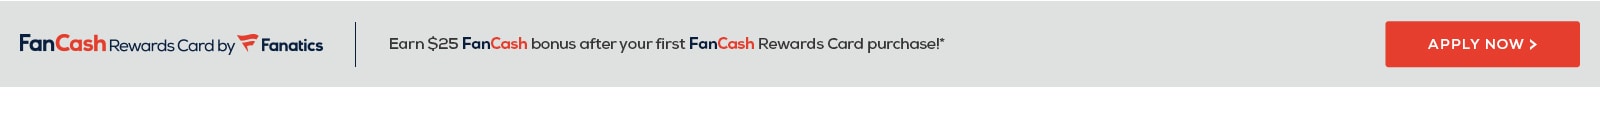 FanCash Rewards Card by Fanatics. Earn $25 FanCash bonus after your first FanCash Rewards Card purchase! Apply now.